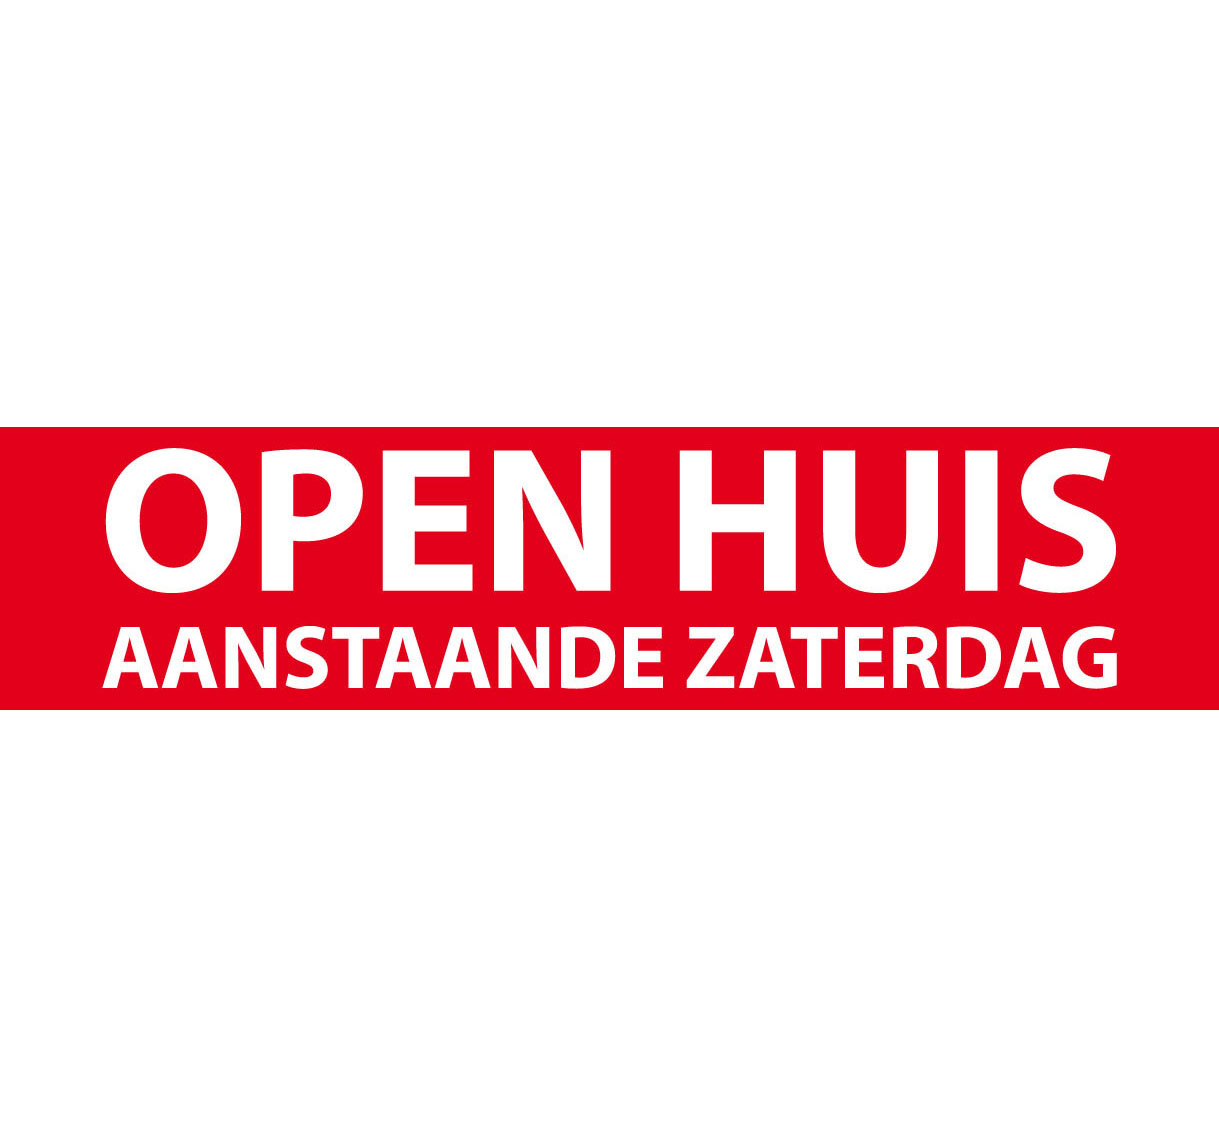 http://www.printklusje.nl/images/productimages/big/Open%20huis%20as%20zat%20rood.jpg